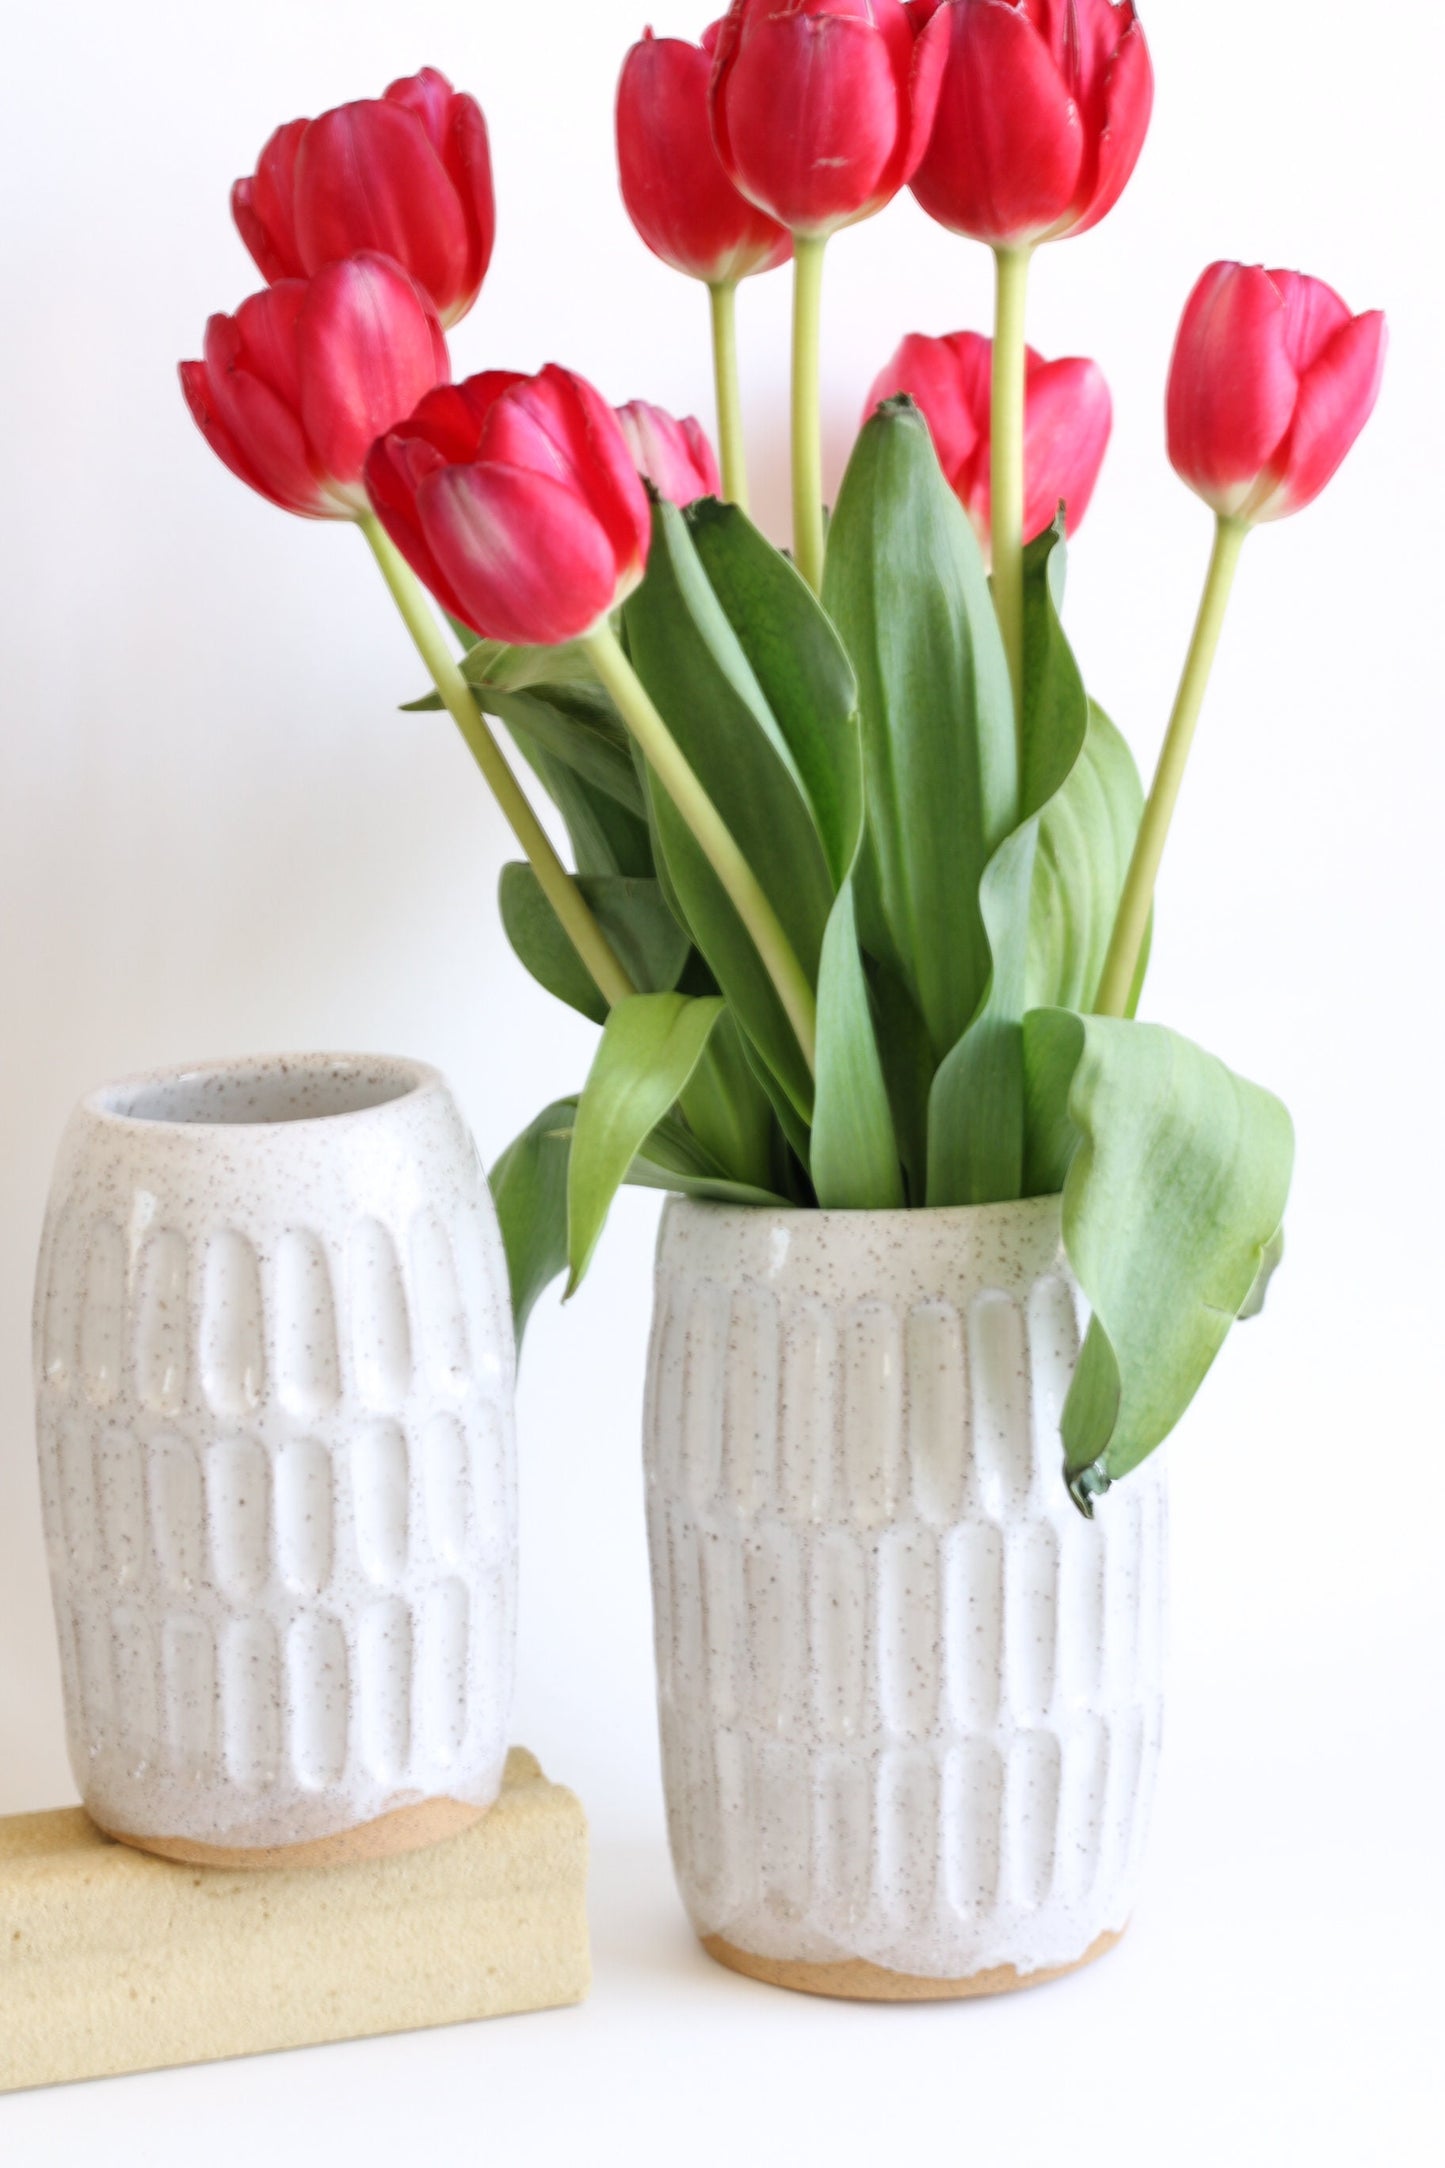 Glossy White + Speckled Buff Ceramic Stoneware Carved Vase - Handmade Modern Ceramic Decor